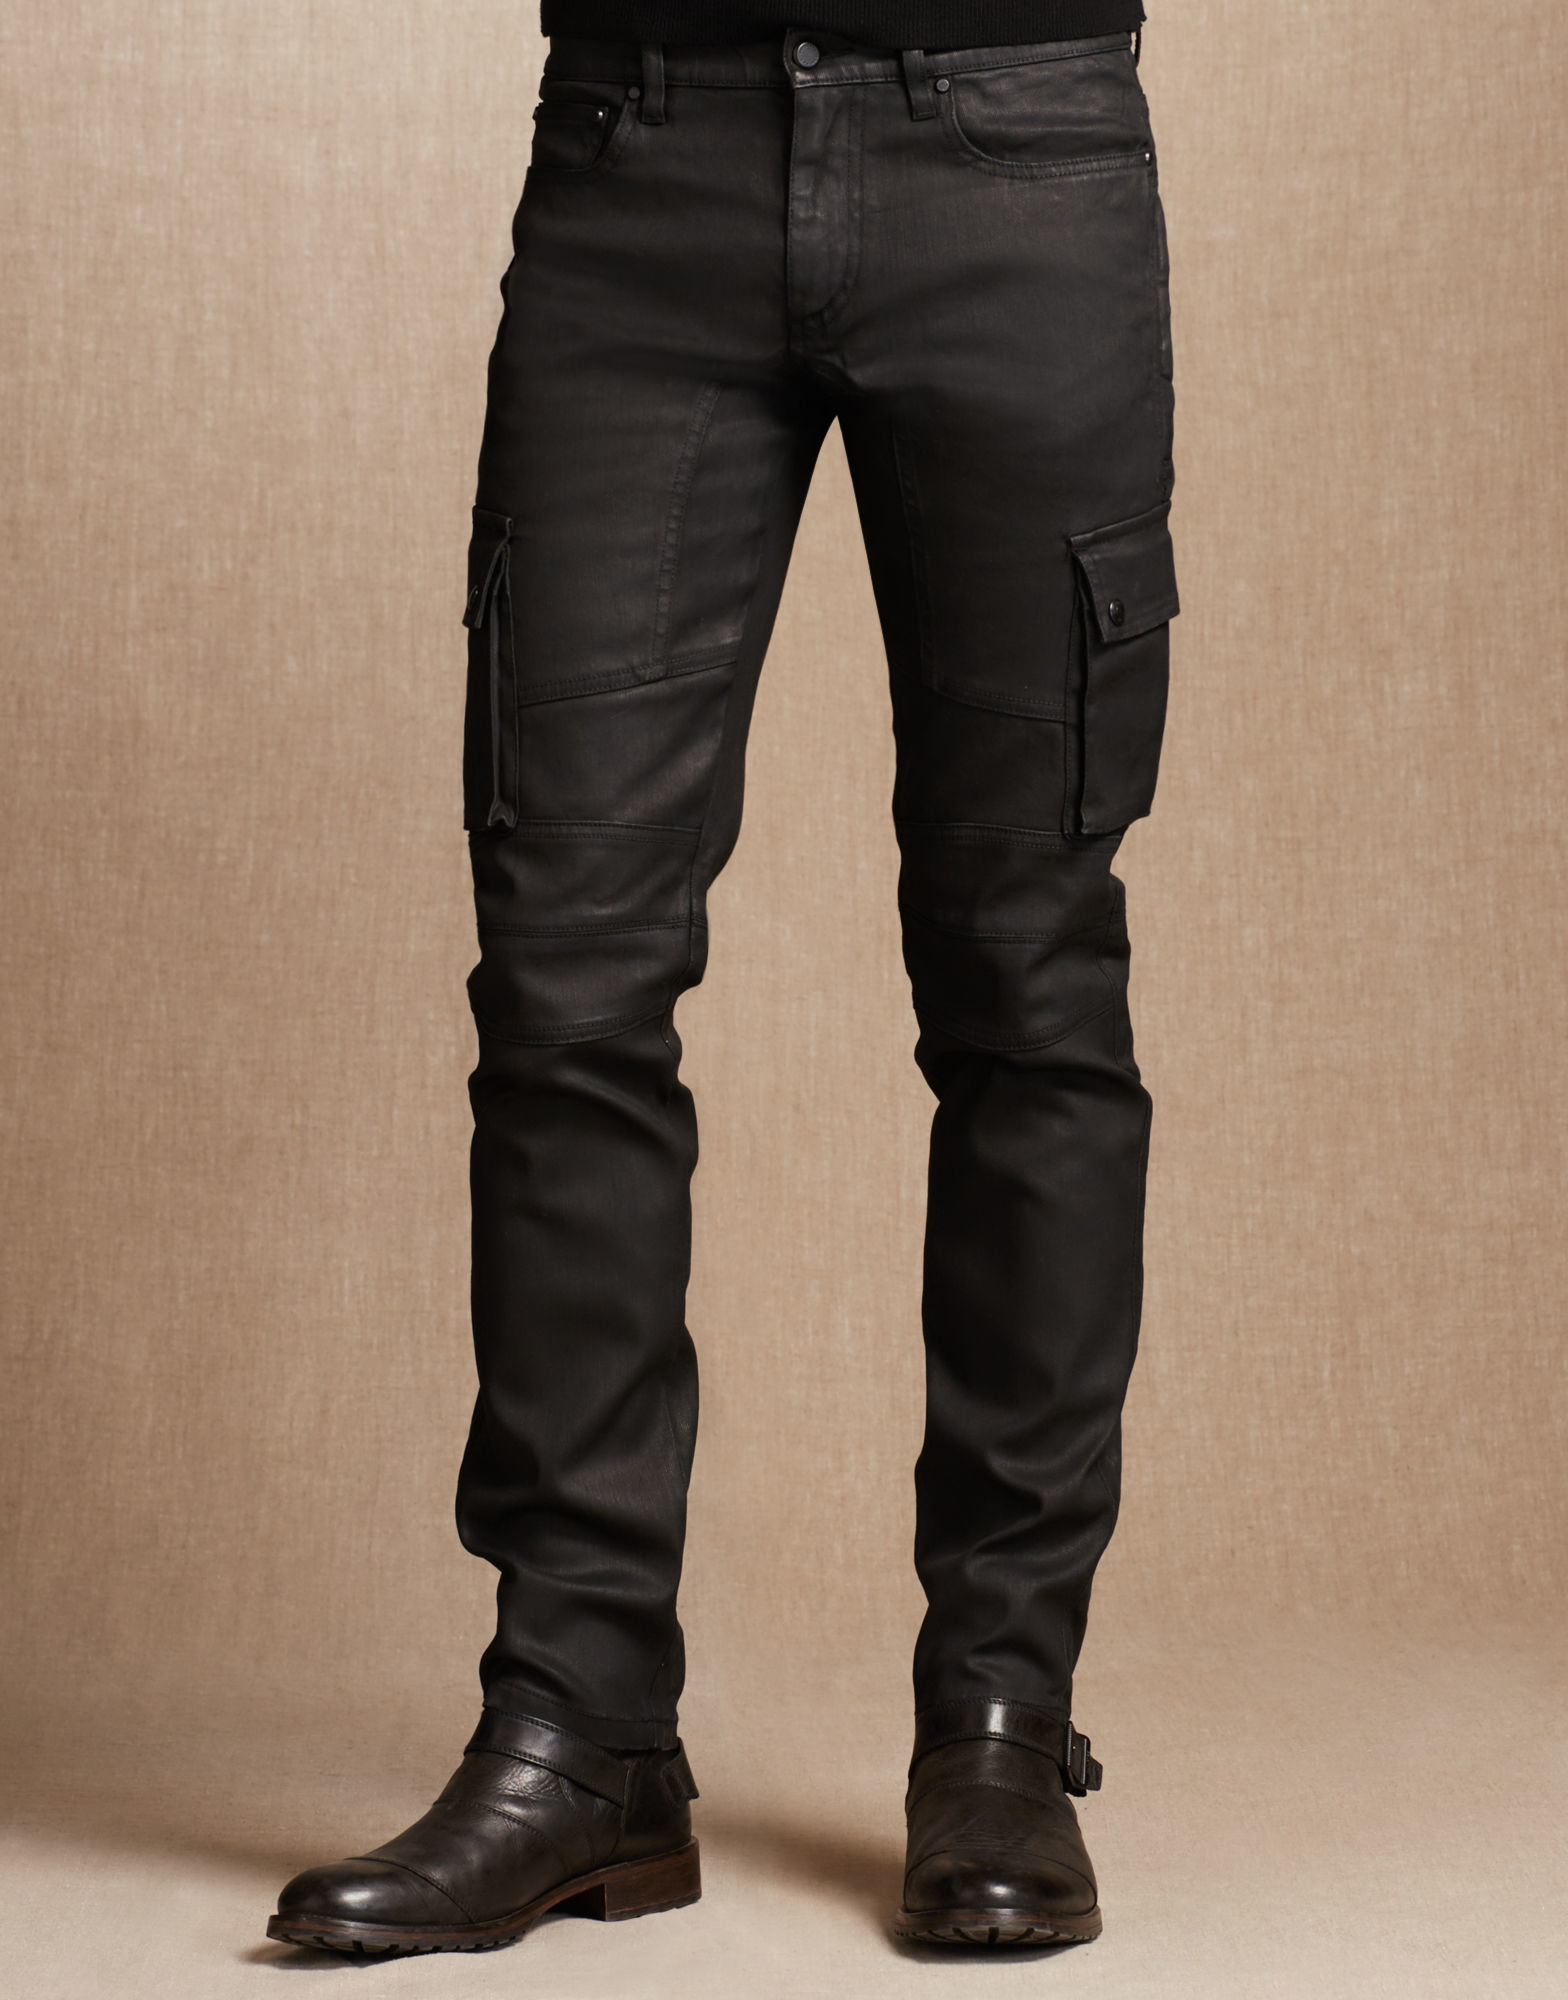 Lyst - Belstaff Roydon Slim Fit Jeans in Black for Men